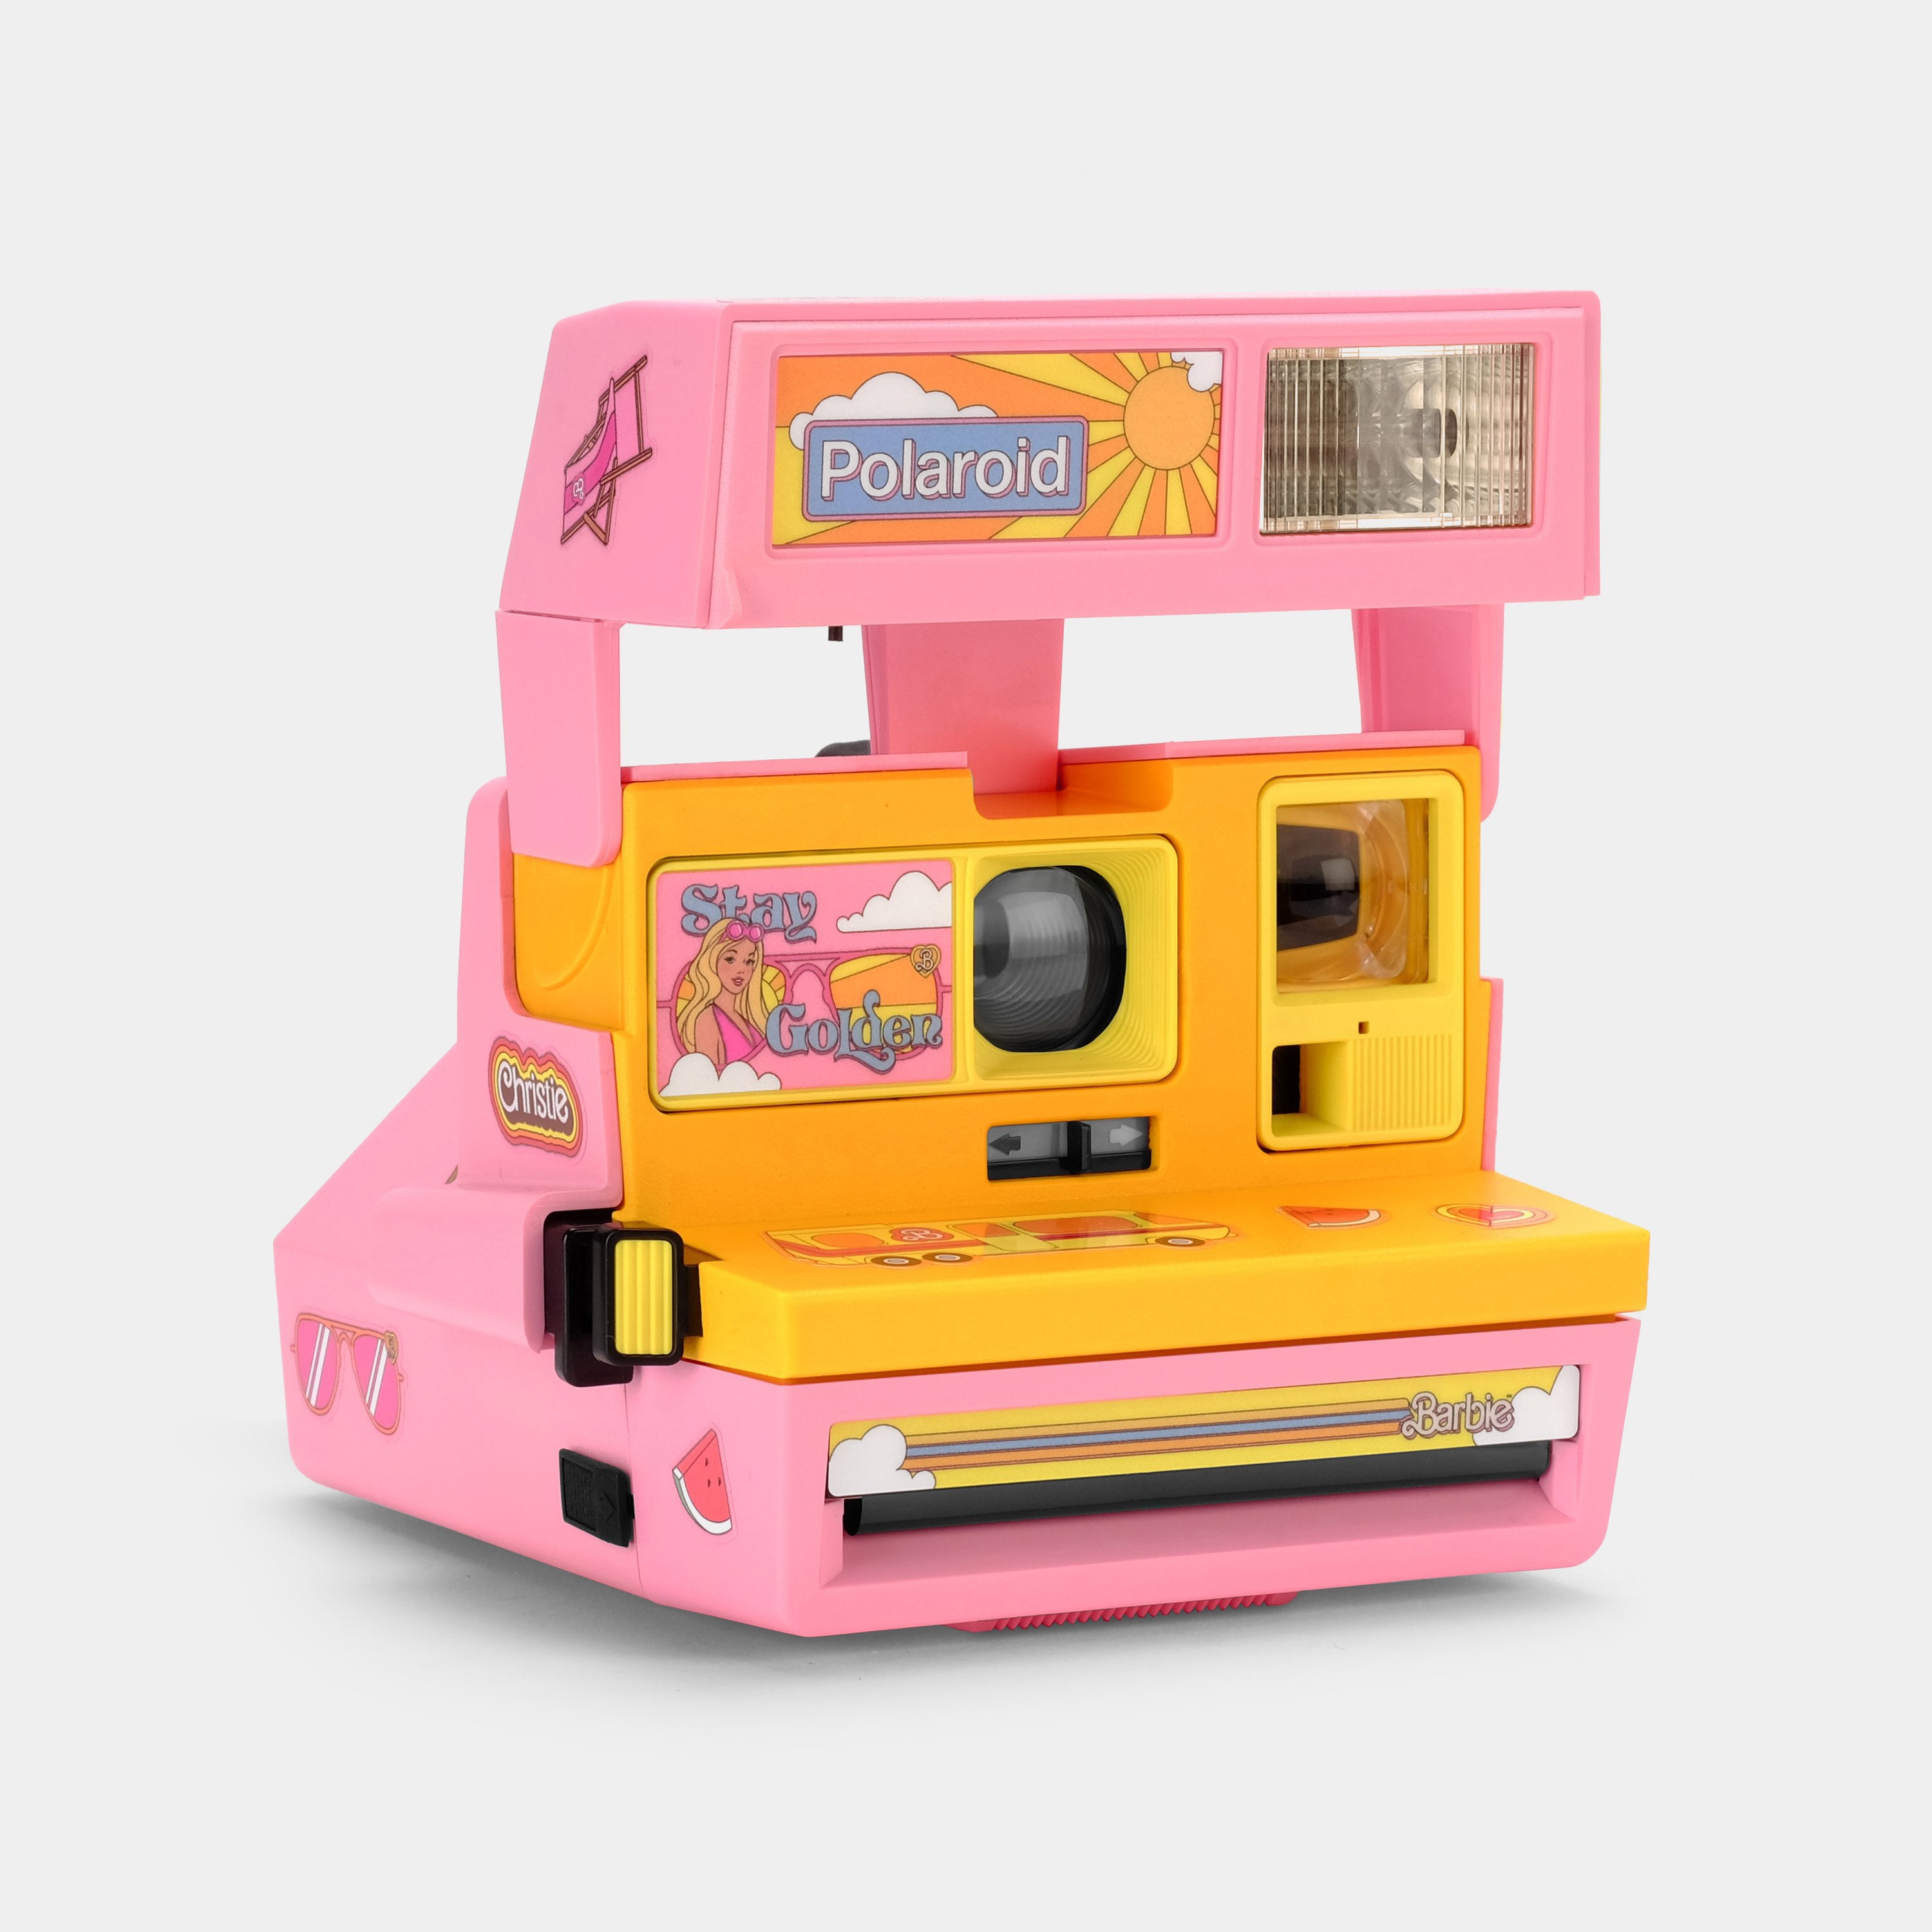 Polaroid 600 Instant Film Camera - Malibu Barbie, Pink